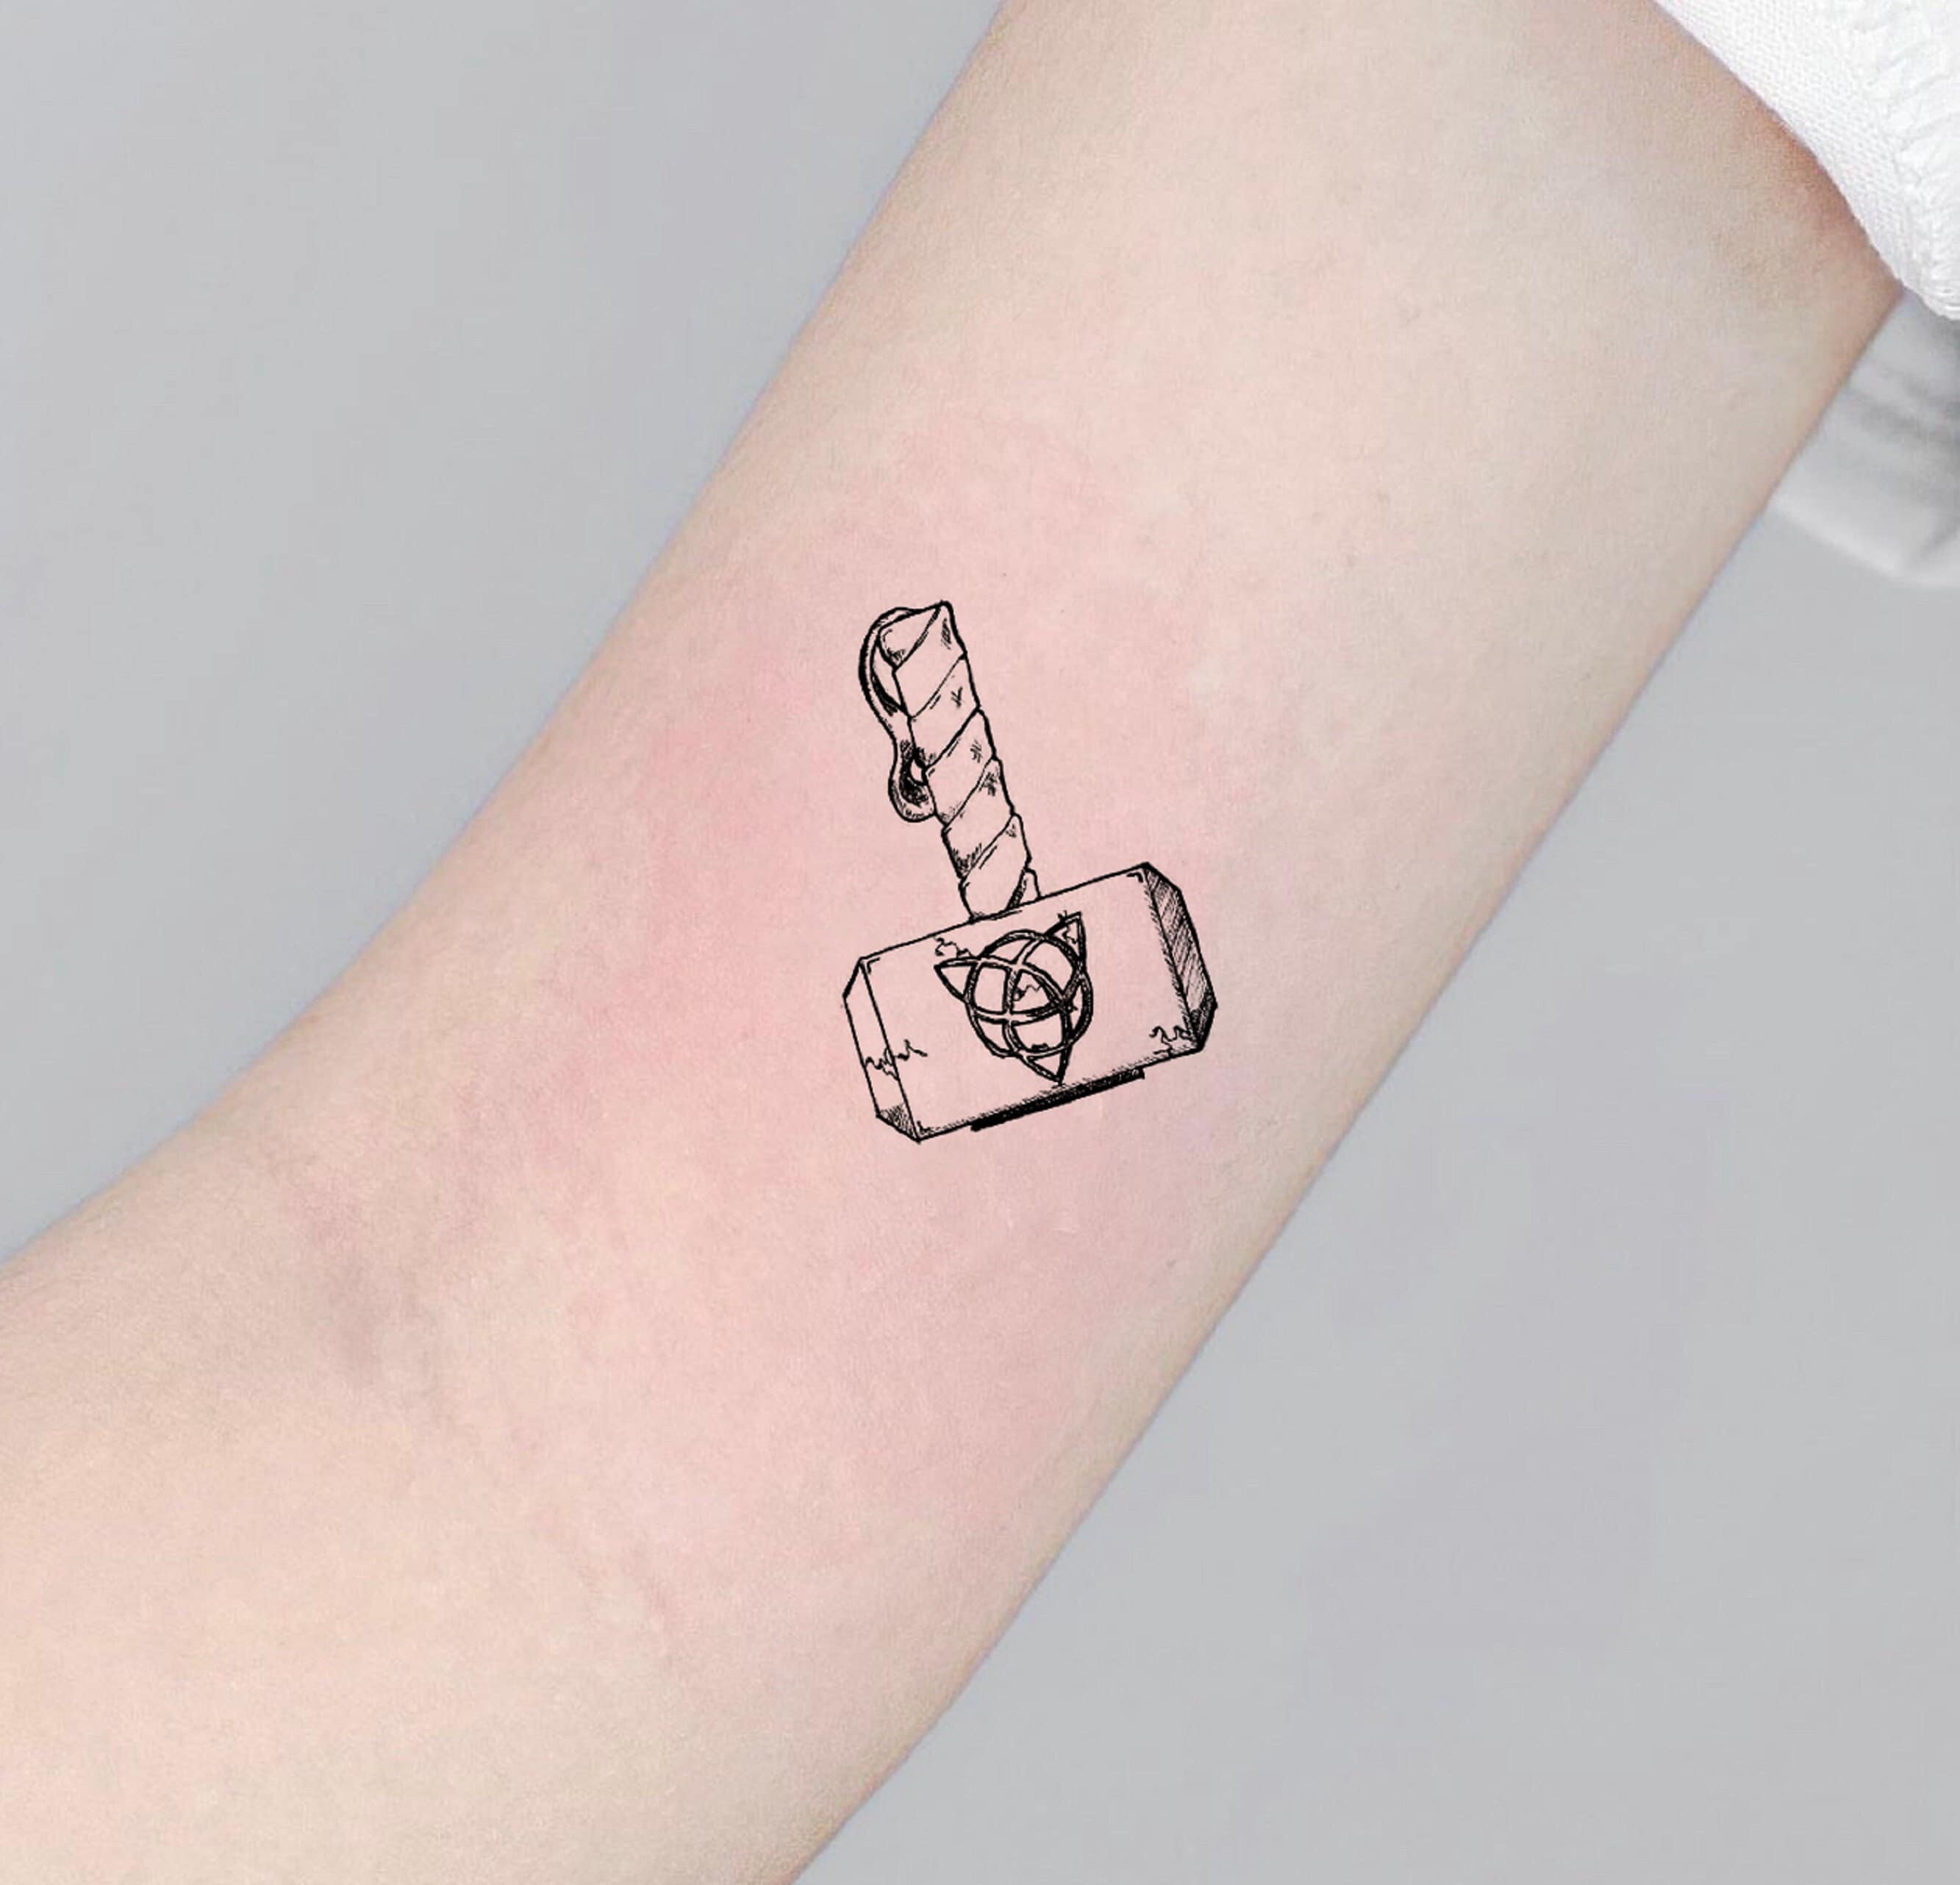 Hammer and brain tattoo by zzizziboy - Tattoogrid.net